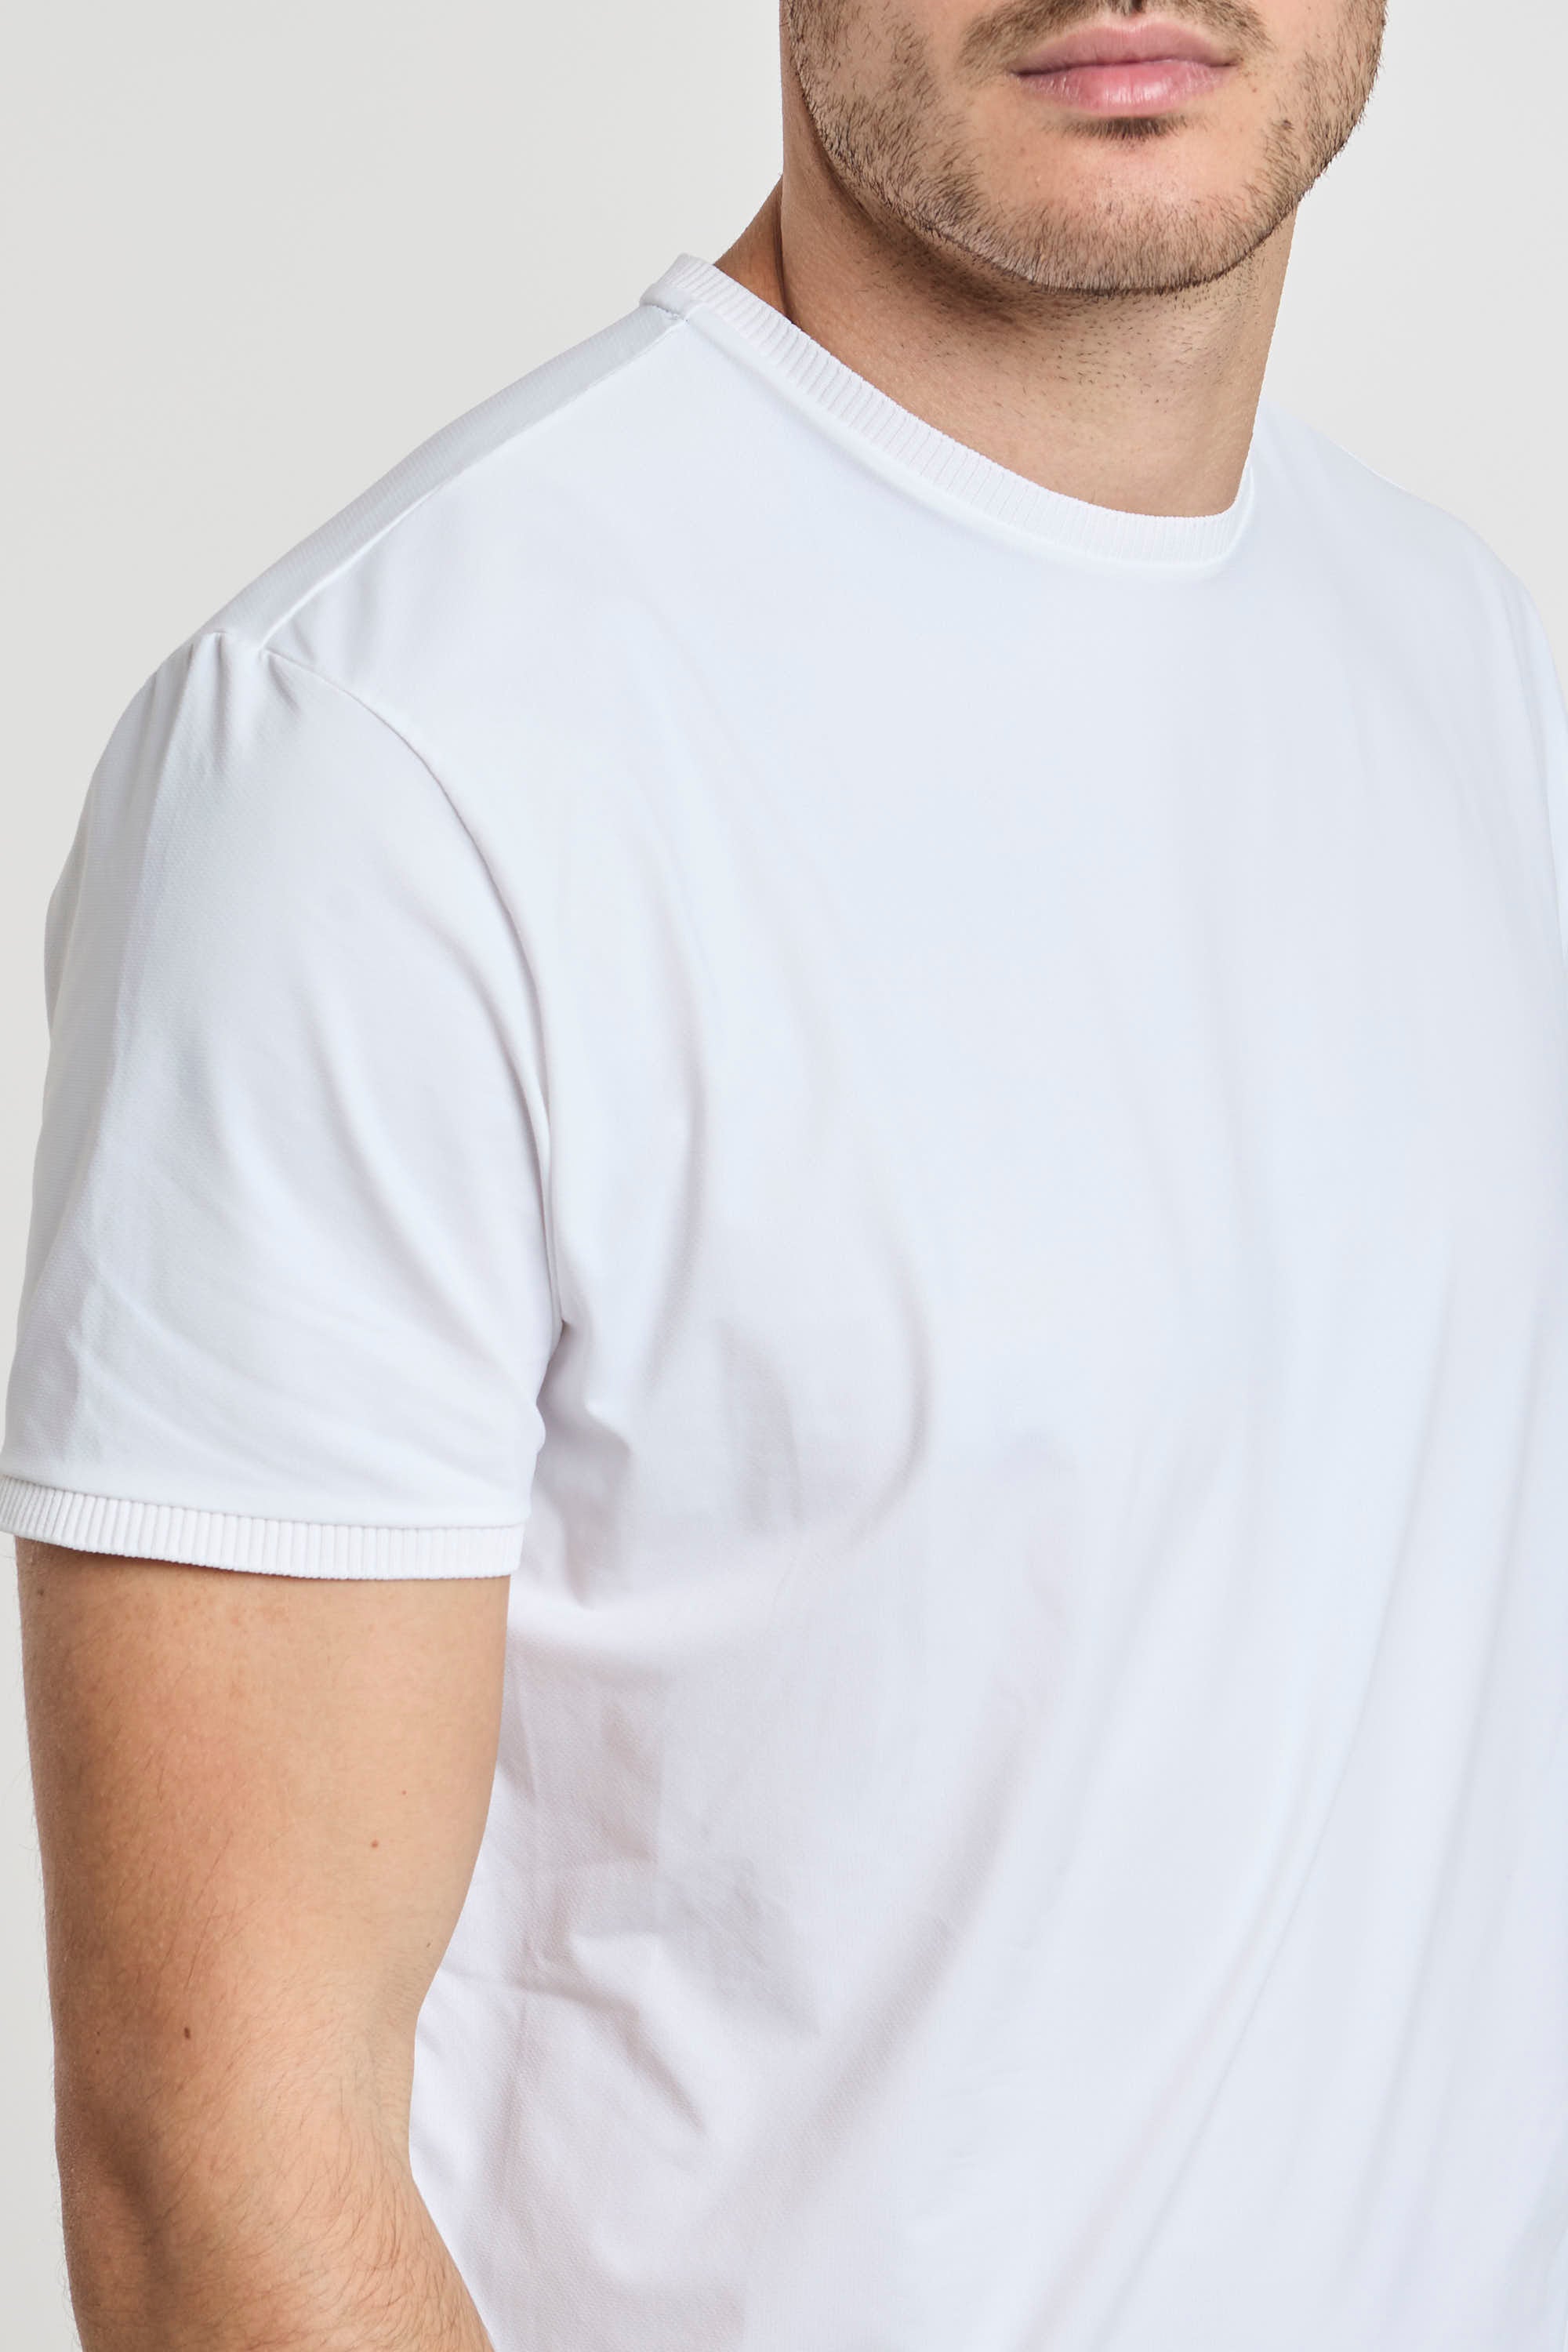 RRD Stretch Oxford White T-shirt-3